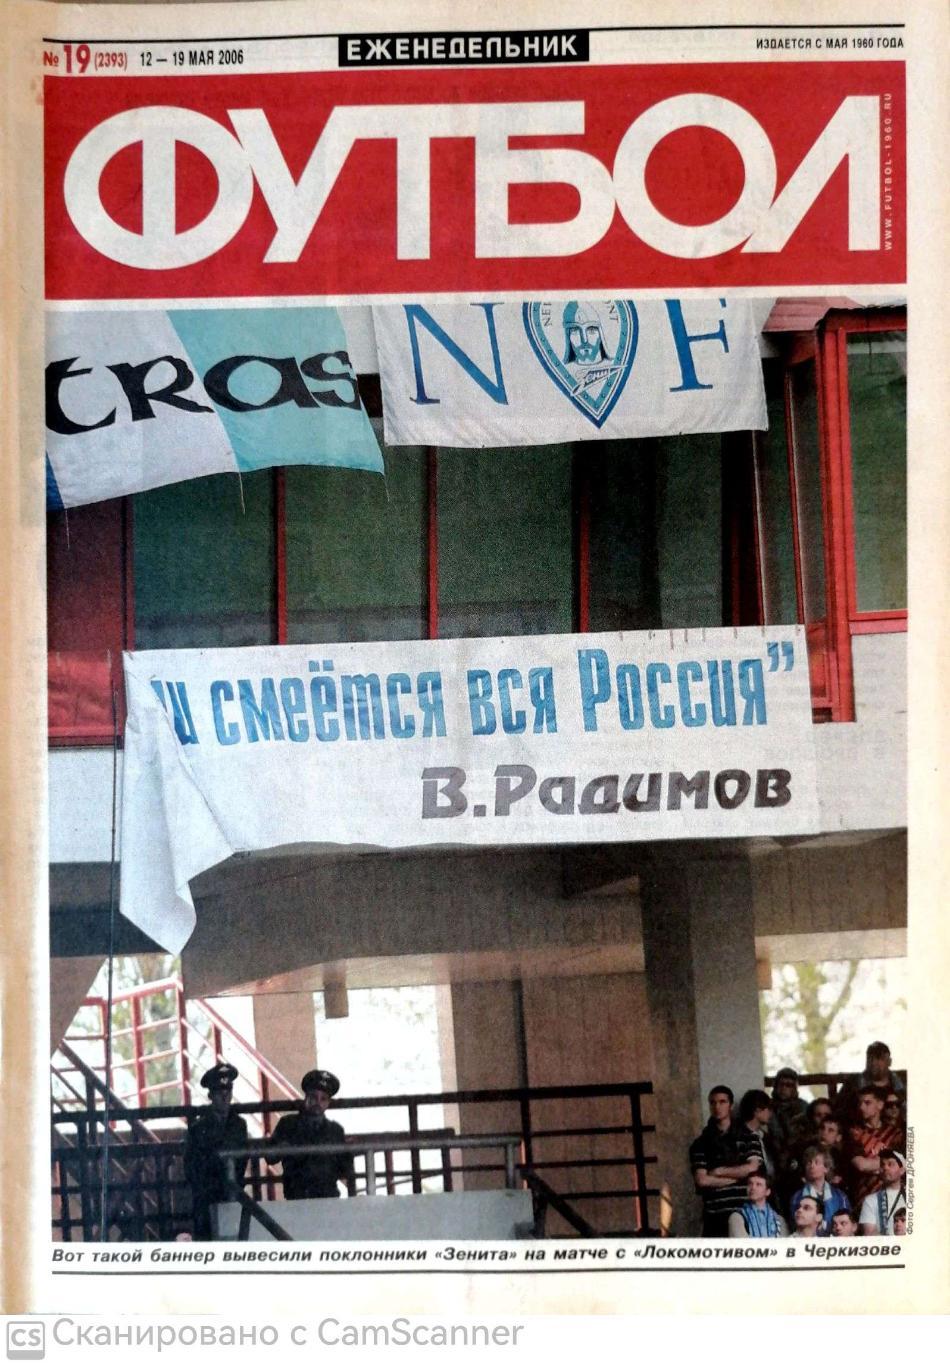 Еженедельник «Футбол» (Москва). 2006 год. №19